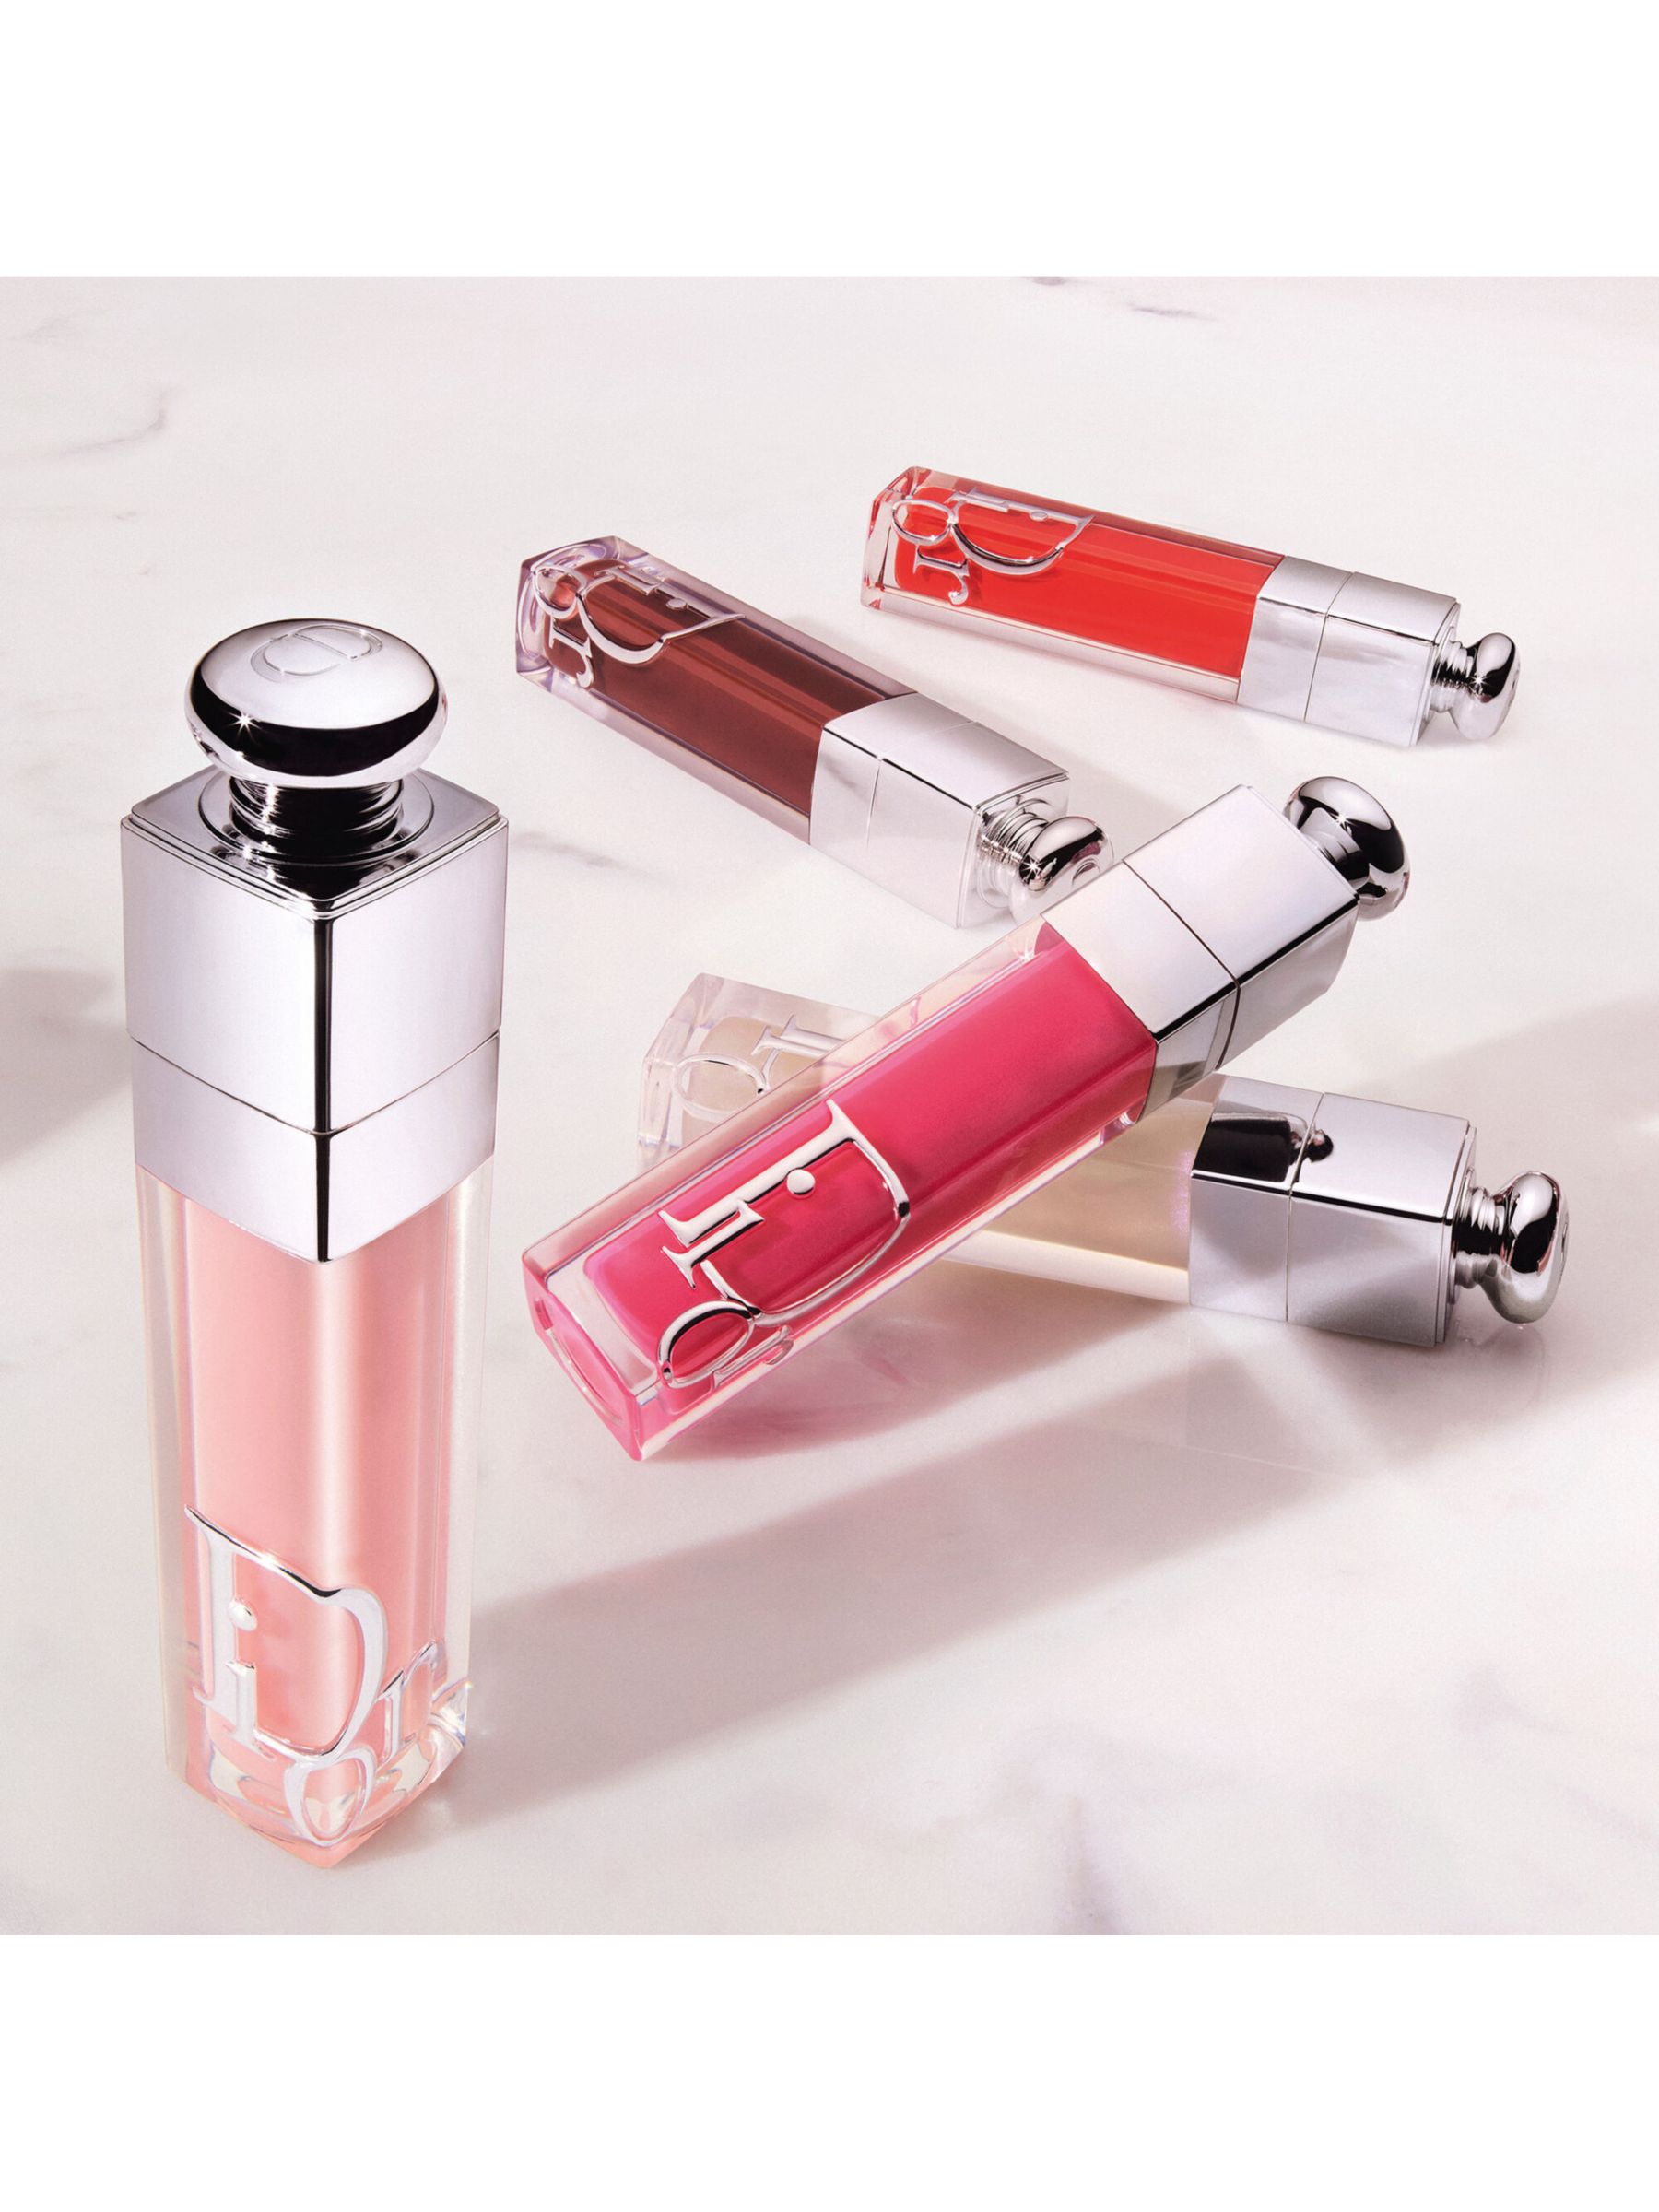 Dior  Dior Addict Lip Maximizer Lip Plumping Gloss: Review and